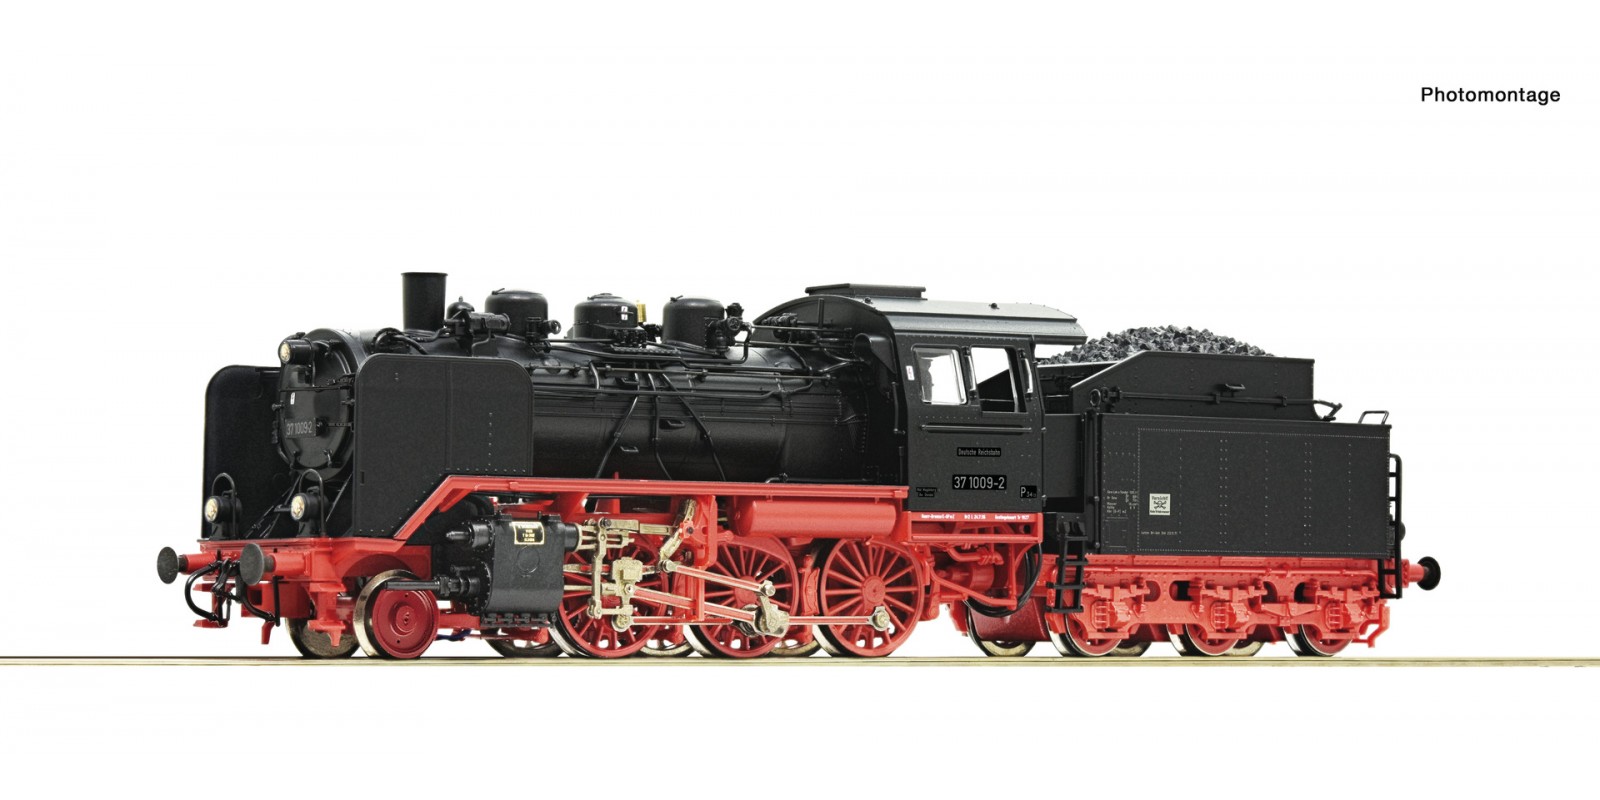 RO71212 Steam locomotive 37 1009-2